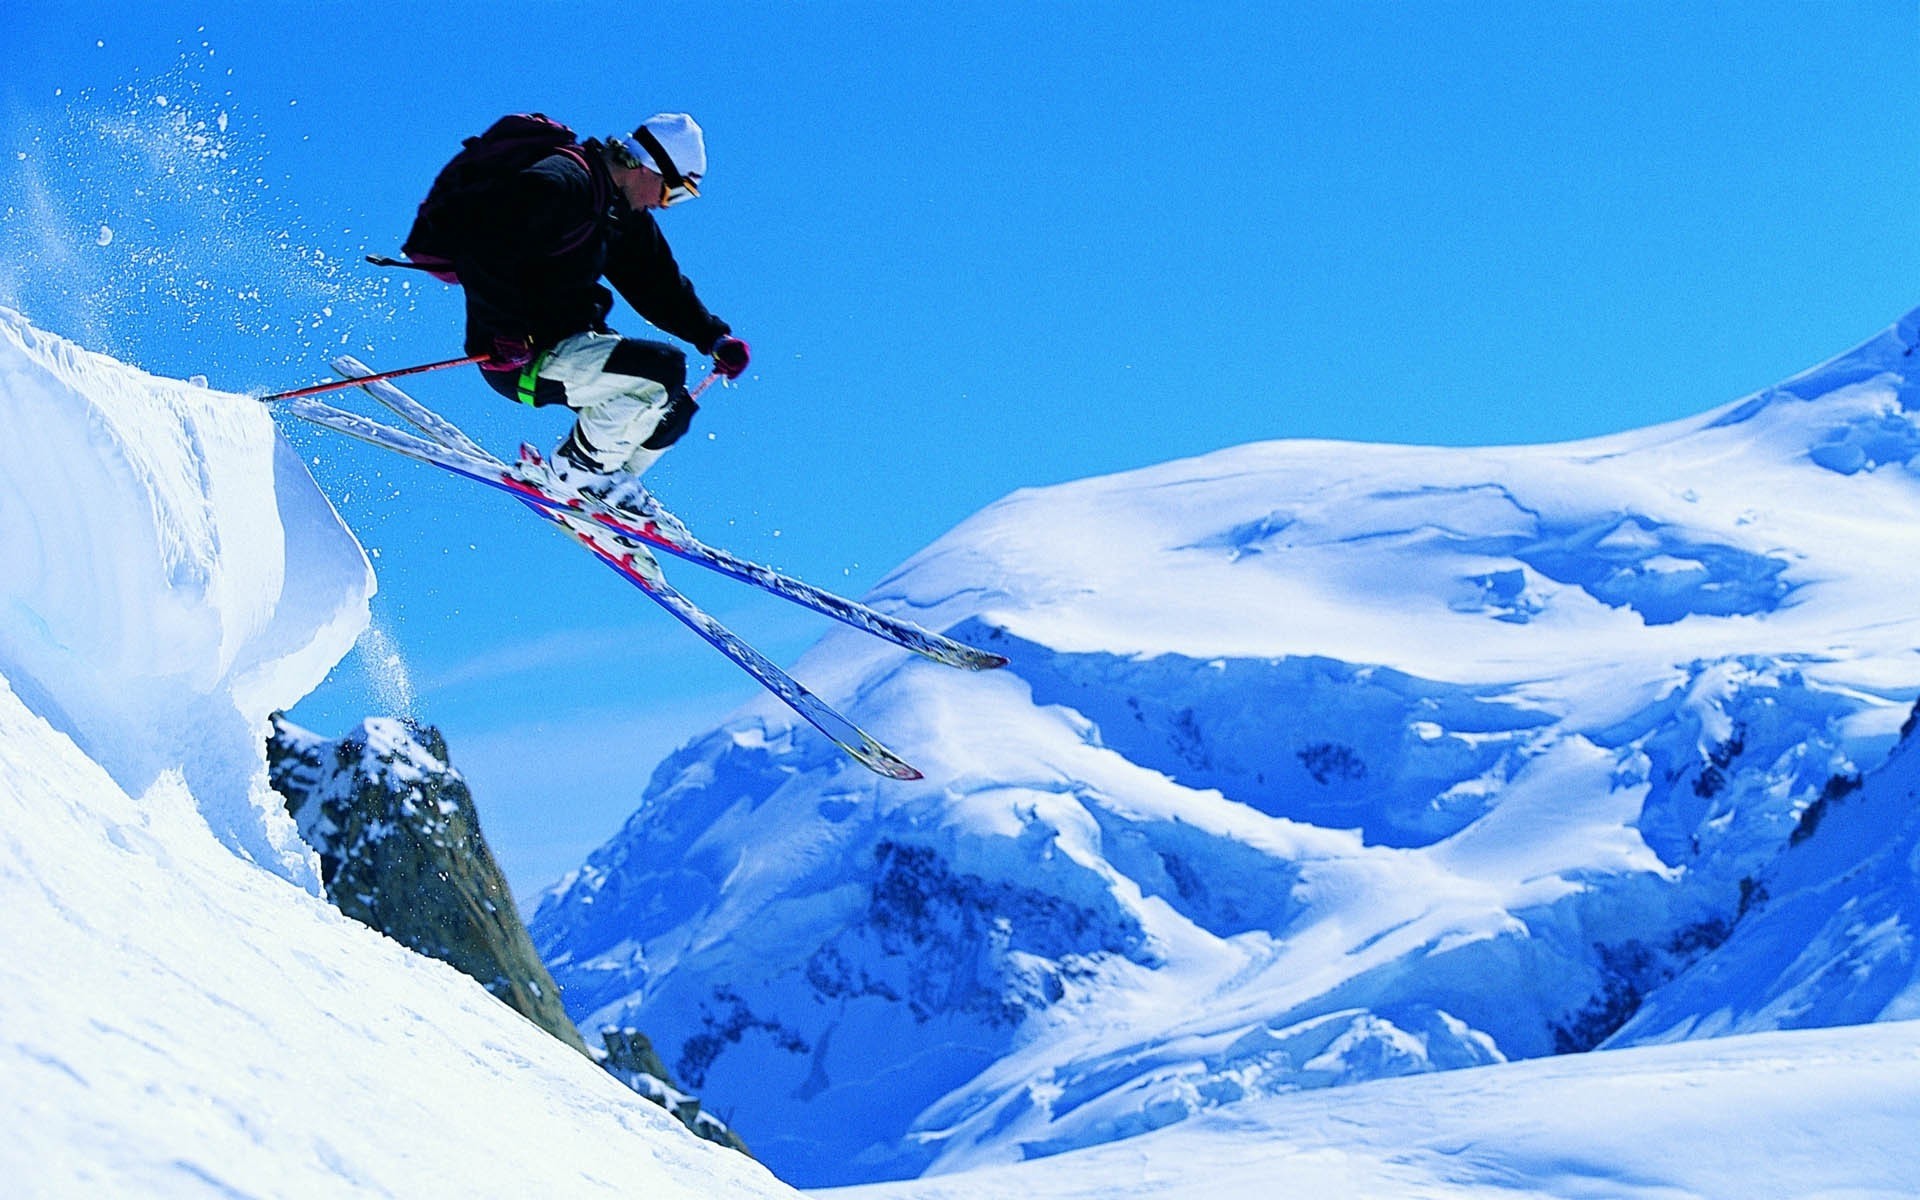 Great skiing. Горнолыжный спорт. Горные лыжи. Экстремальные горные лыжи. Горы лыжи.